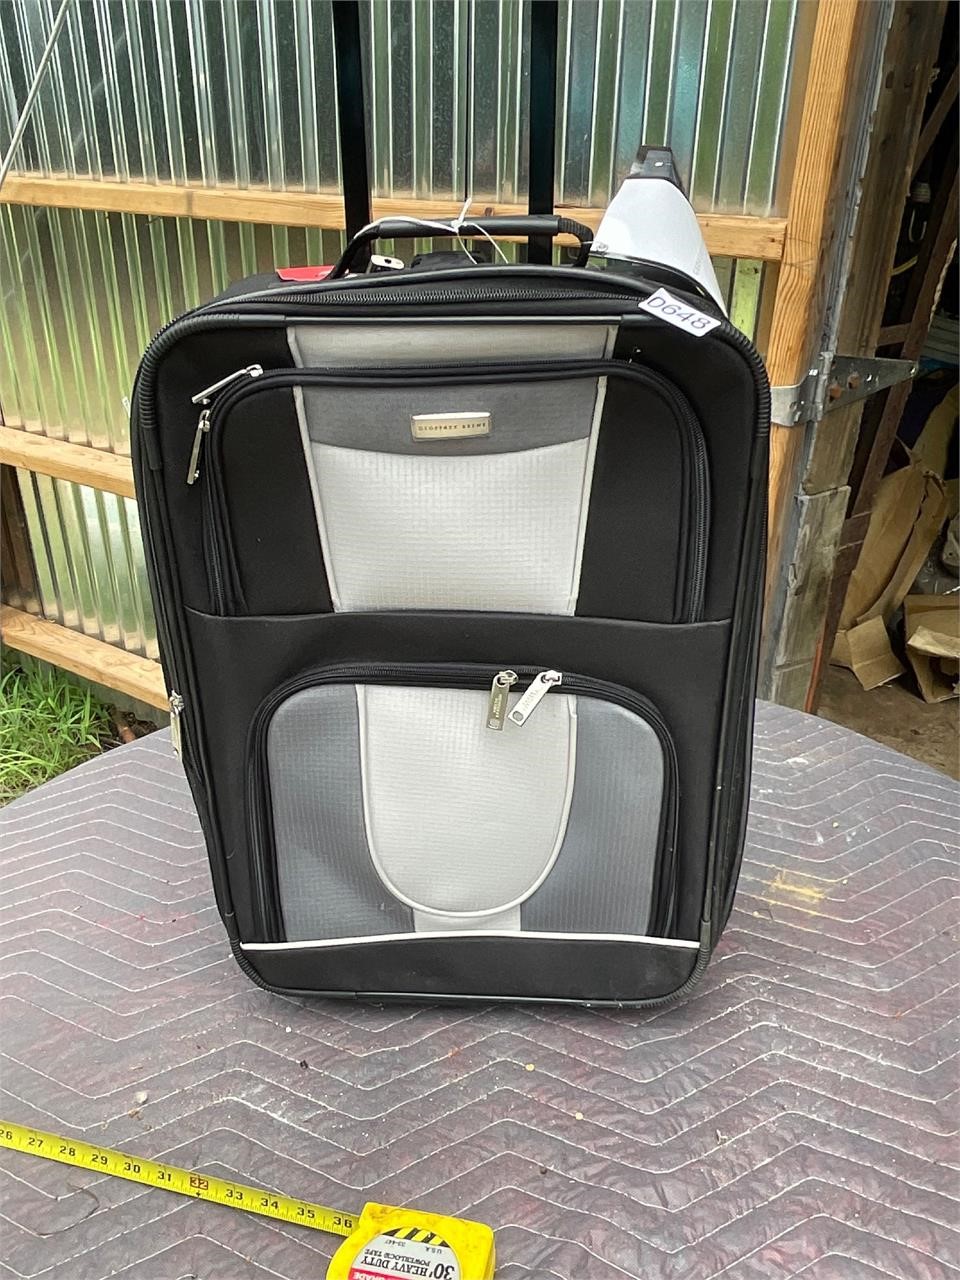 Geoffrey Brine Rolling Suitcase- never used